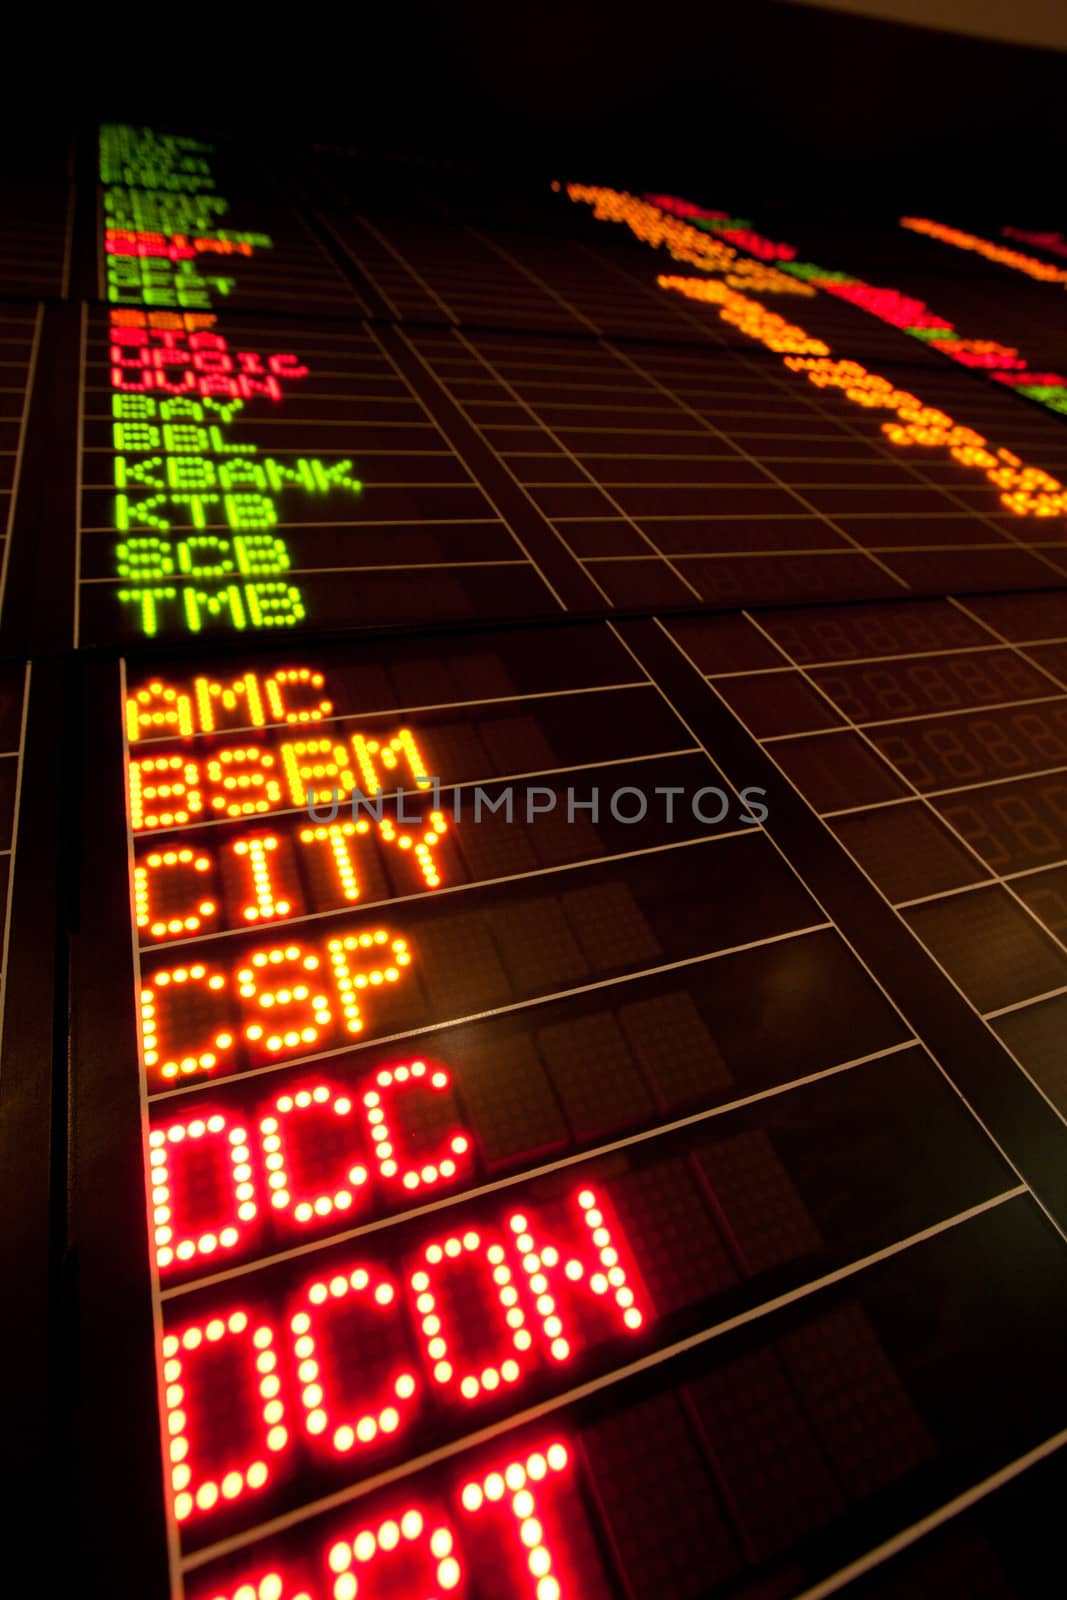 Display of Stock market quotes by myrainjom01